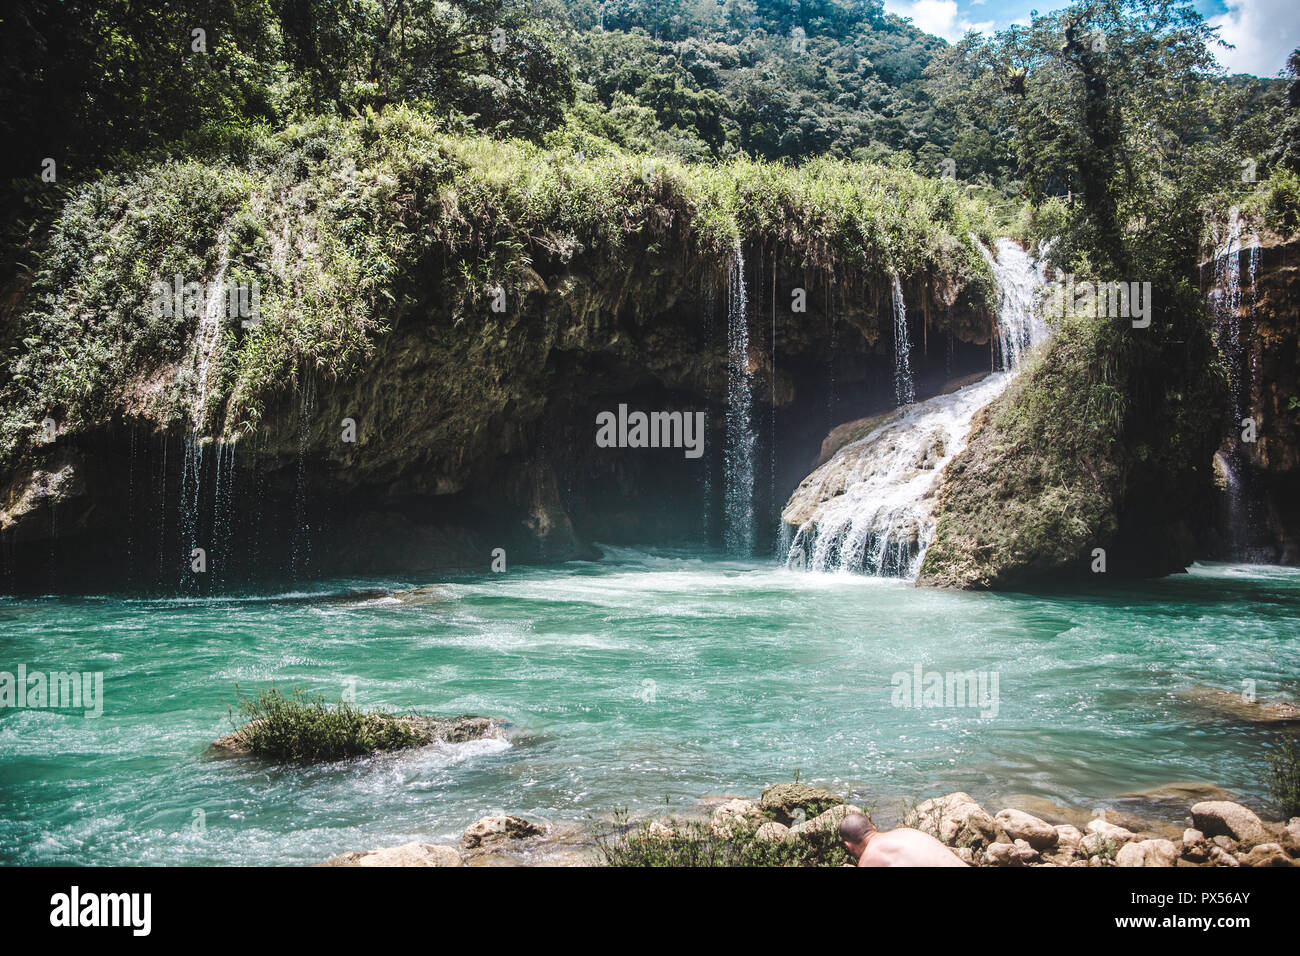 Bella, turchese piscine naturali di Semuc Champey, una popolare destinazione turistica in Guatemala Foto Stock